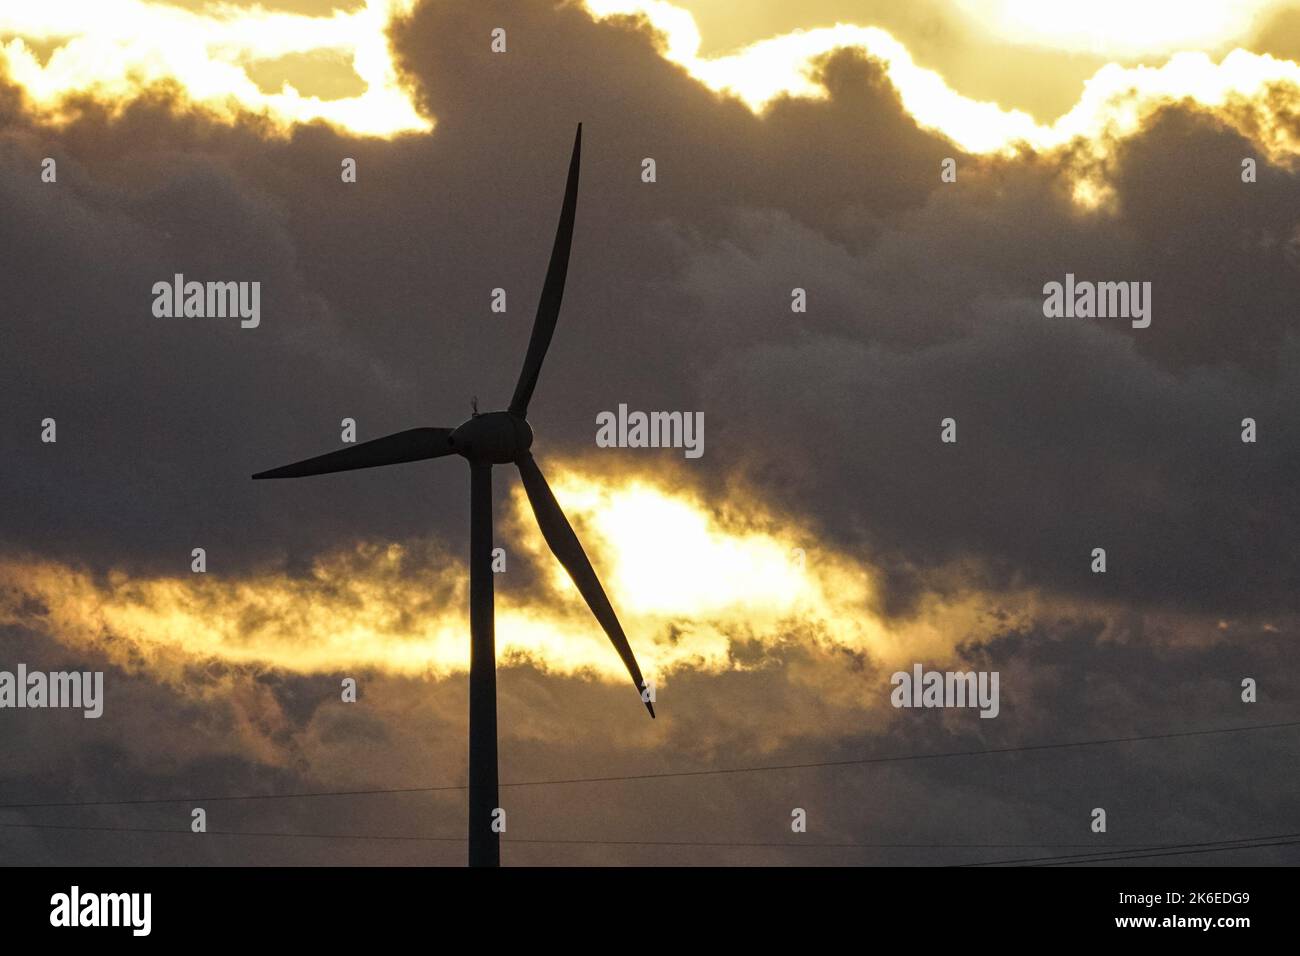 Palas de turbina de viento en fondo de cielo tormentoso Foto de stock